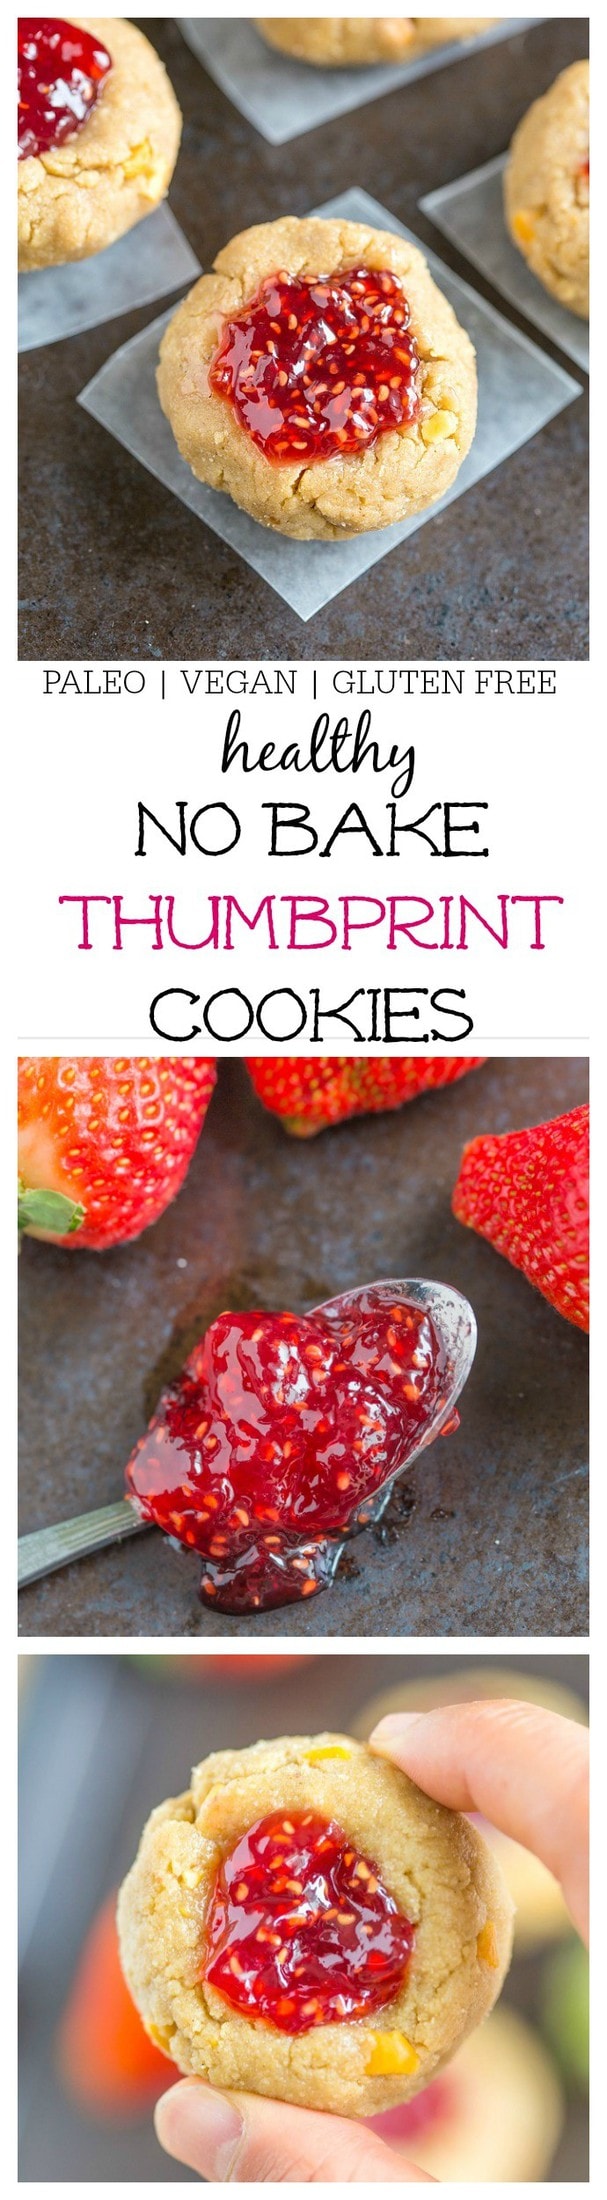 Healthy No Bake Thumbprint Cookies- Ready in 10 minutes + Vegan, GF + Paleo- @thebigmansworld - thebigmansworld.com